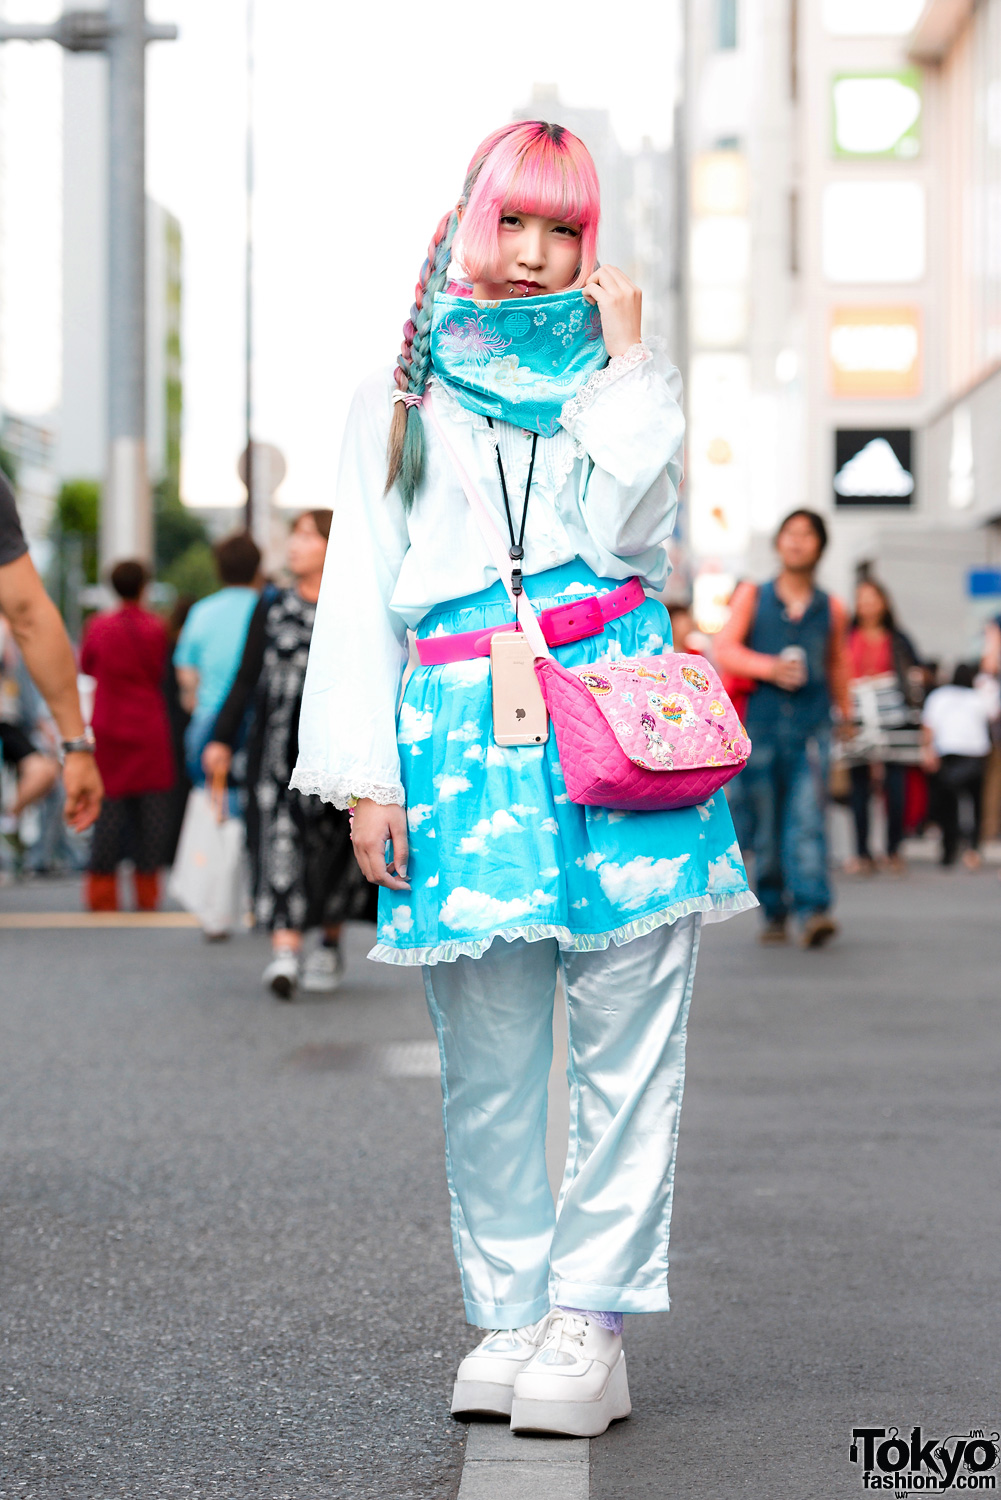 Handmade Harajuku Street Style w/ Clouds, Flowers, Pink Hair, Piercings, Cowl Scarf, Flappy & Choppy